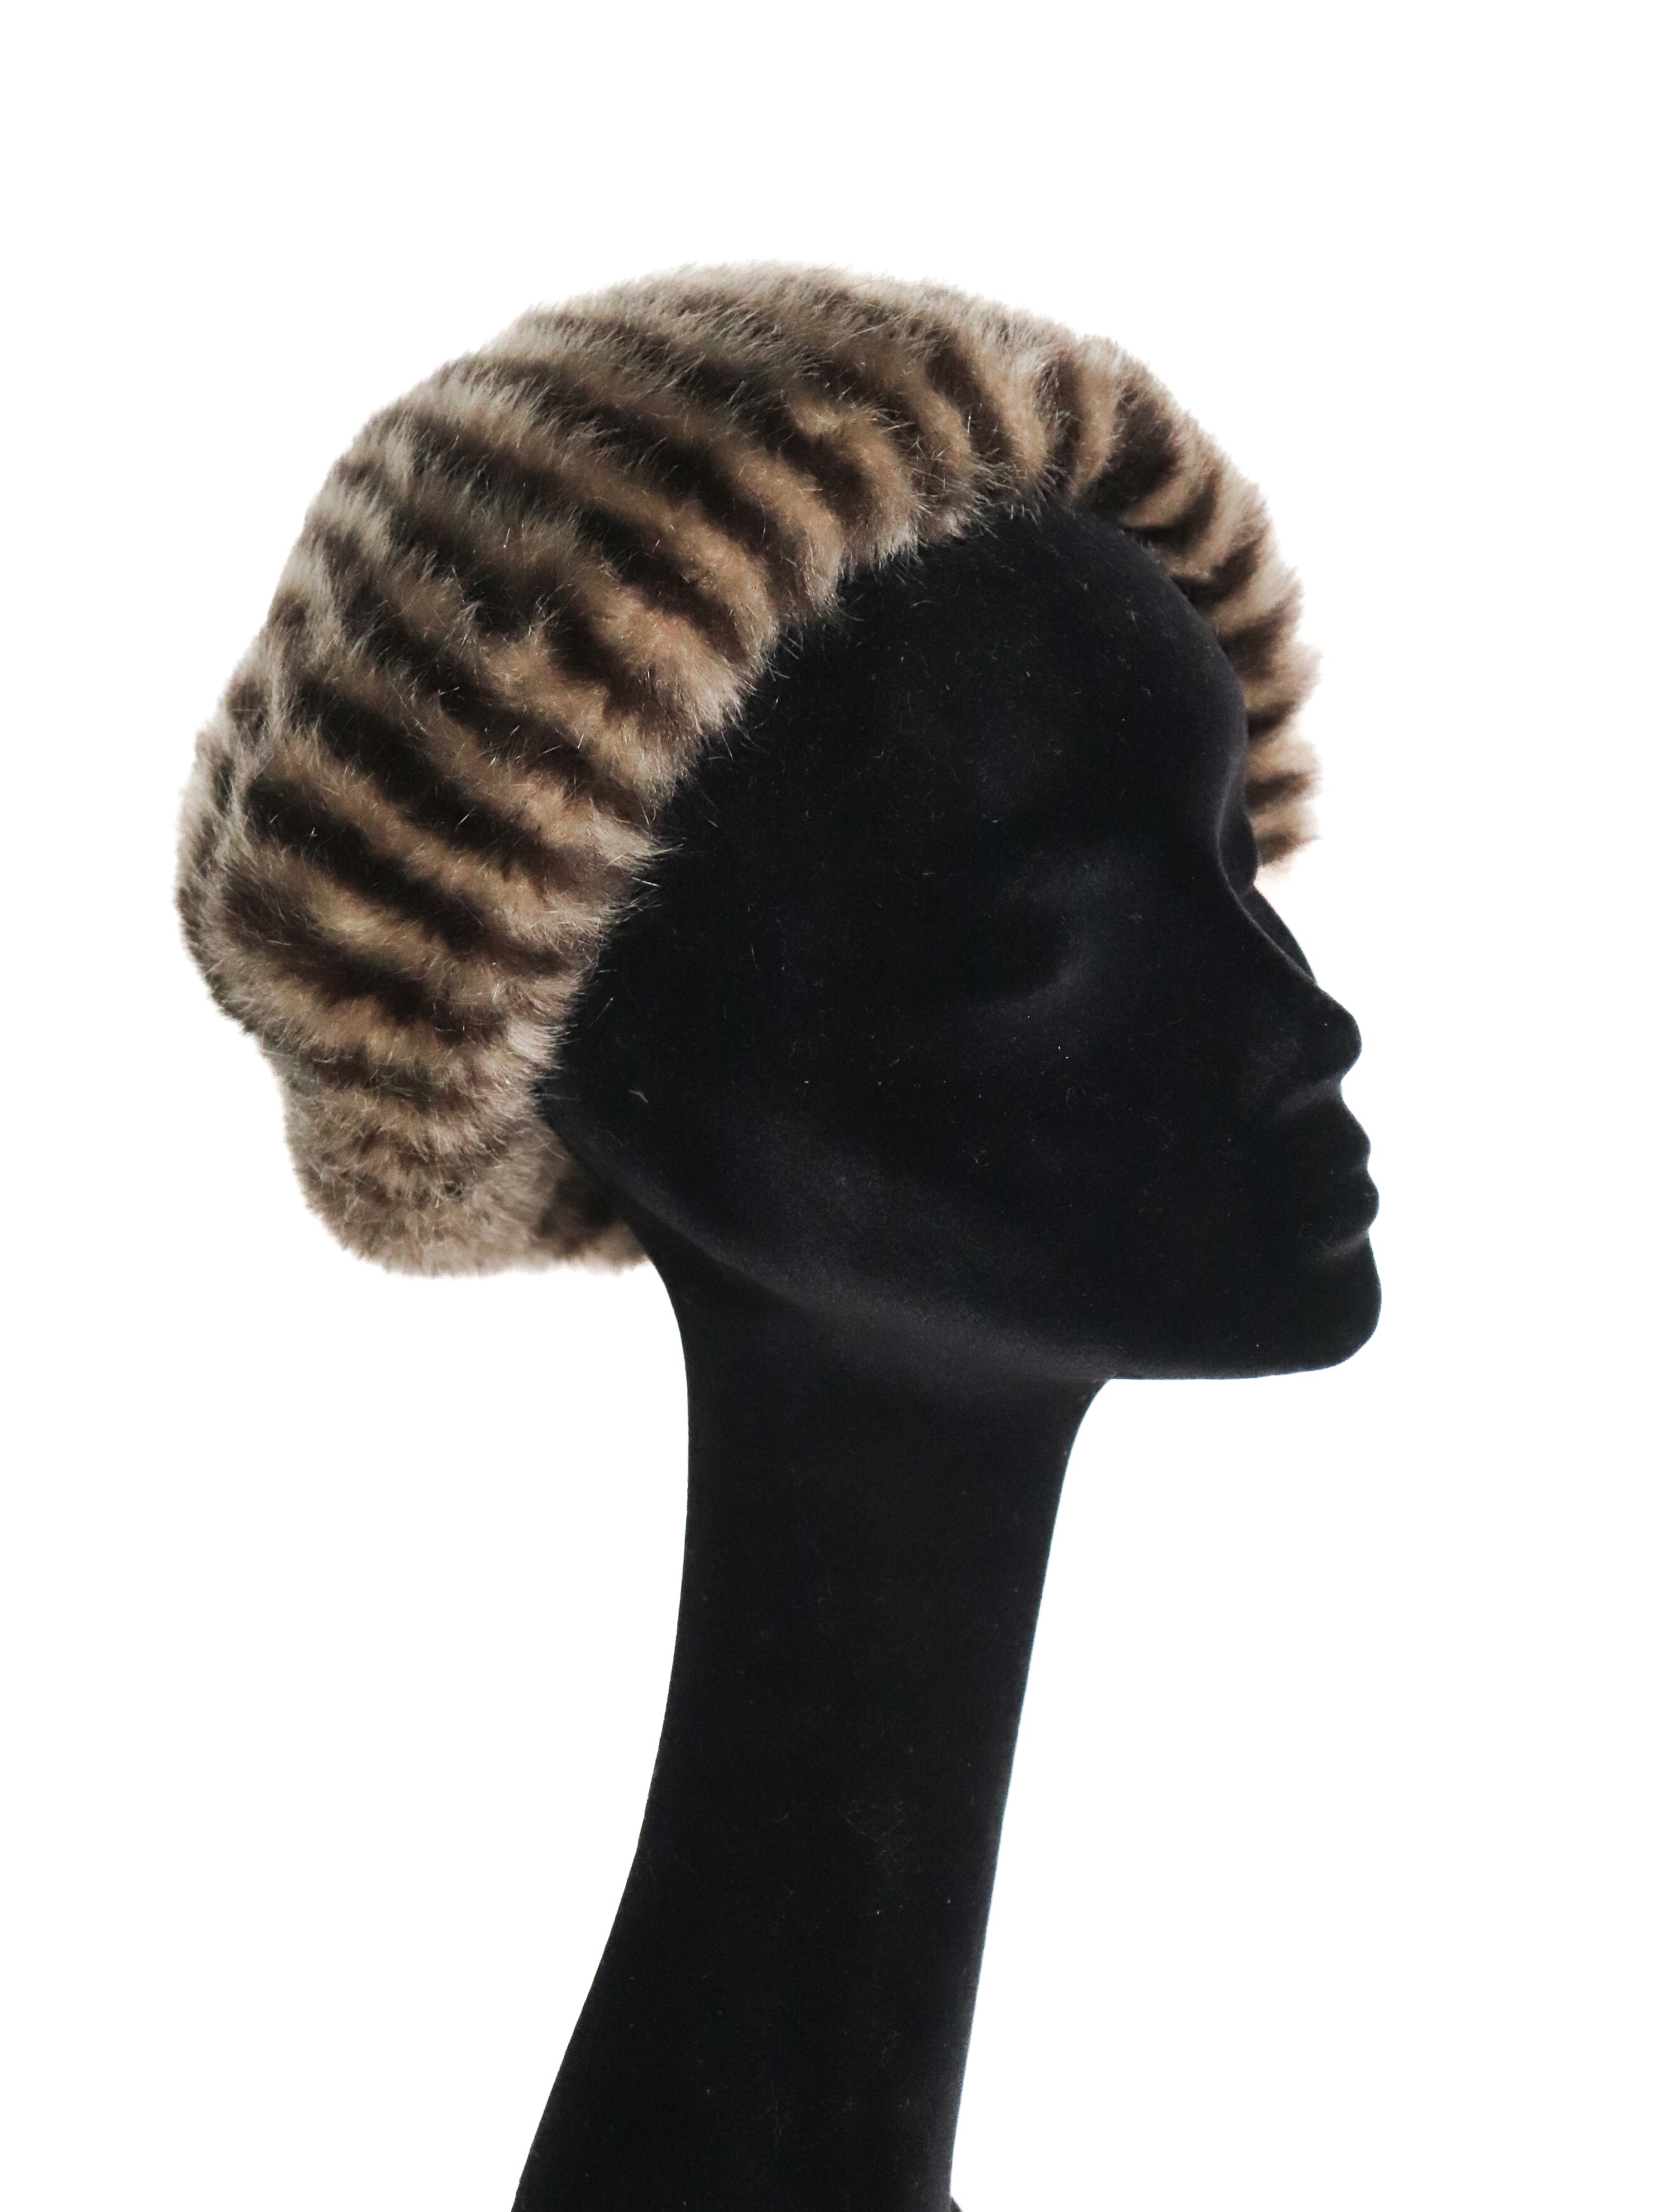 Esdel Vintage Animal Print FAUX Fur Beret  Hat  1960s - S / M